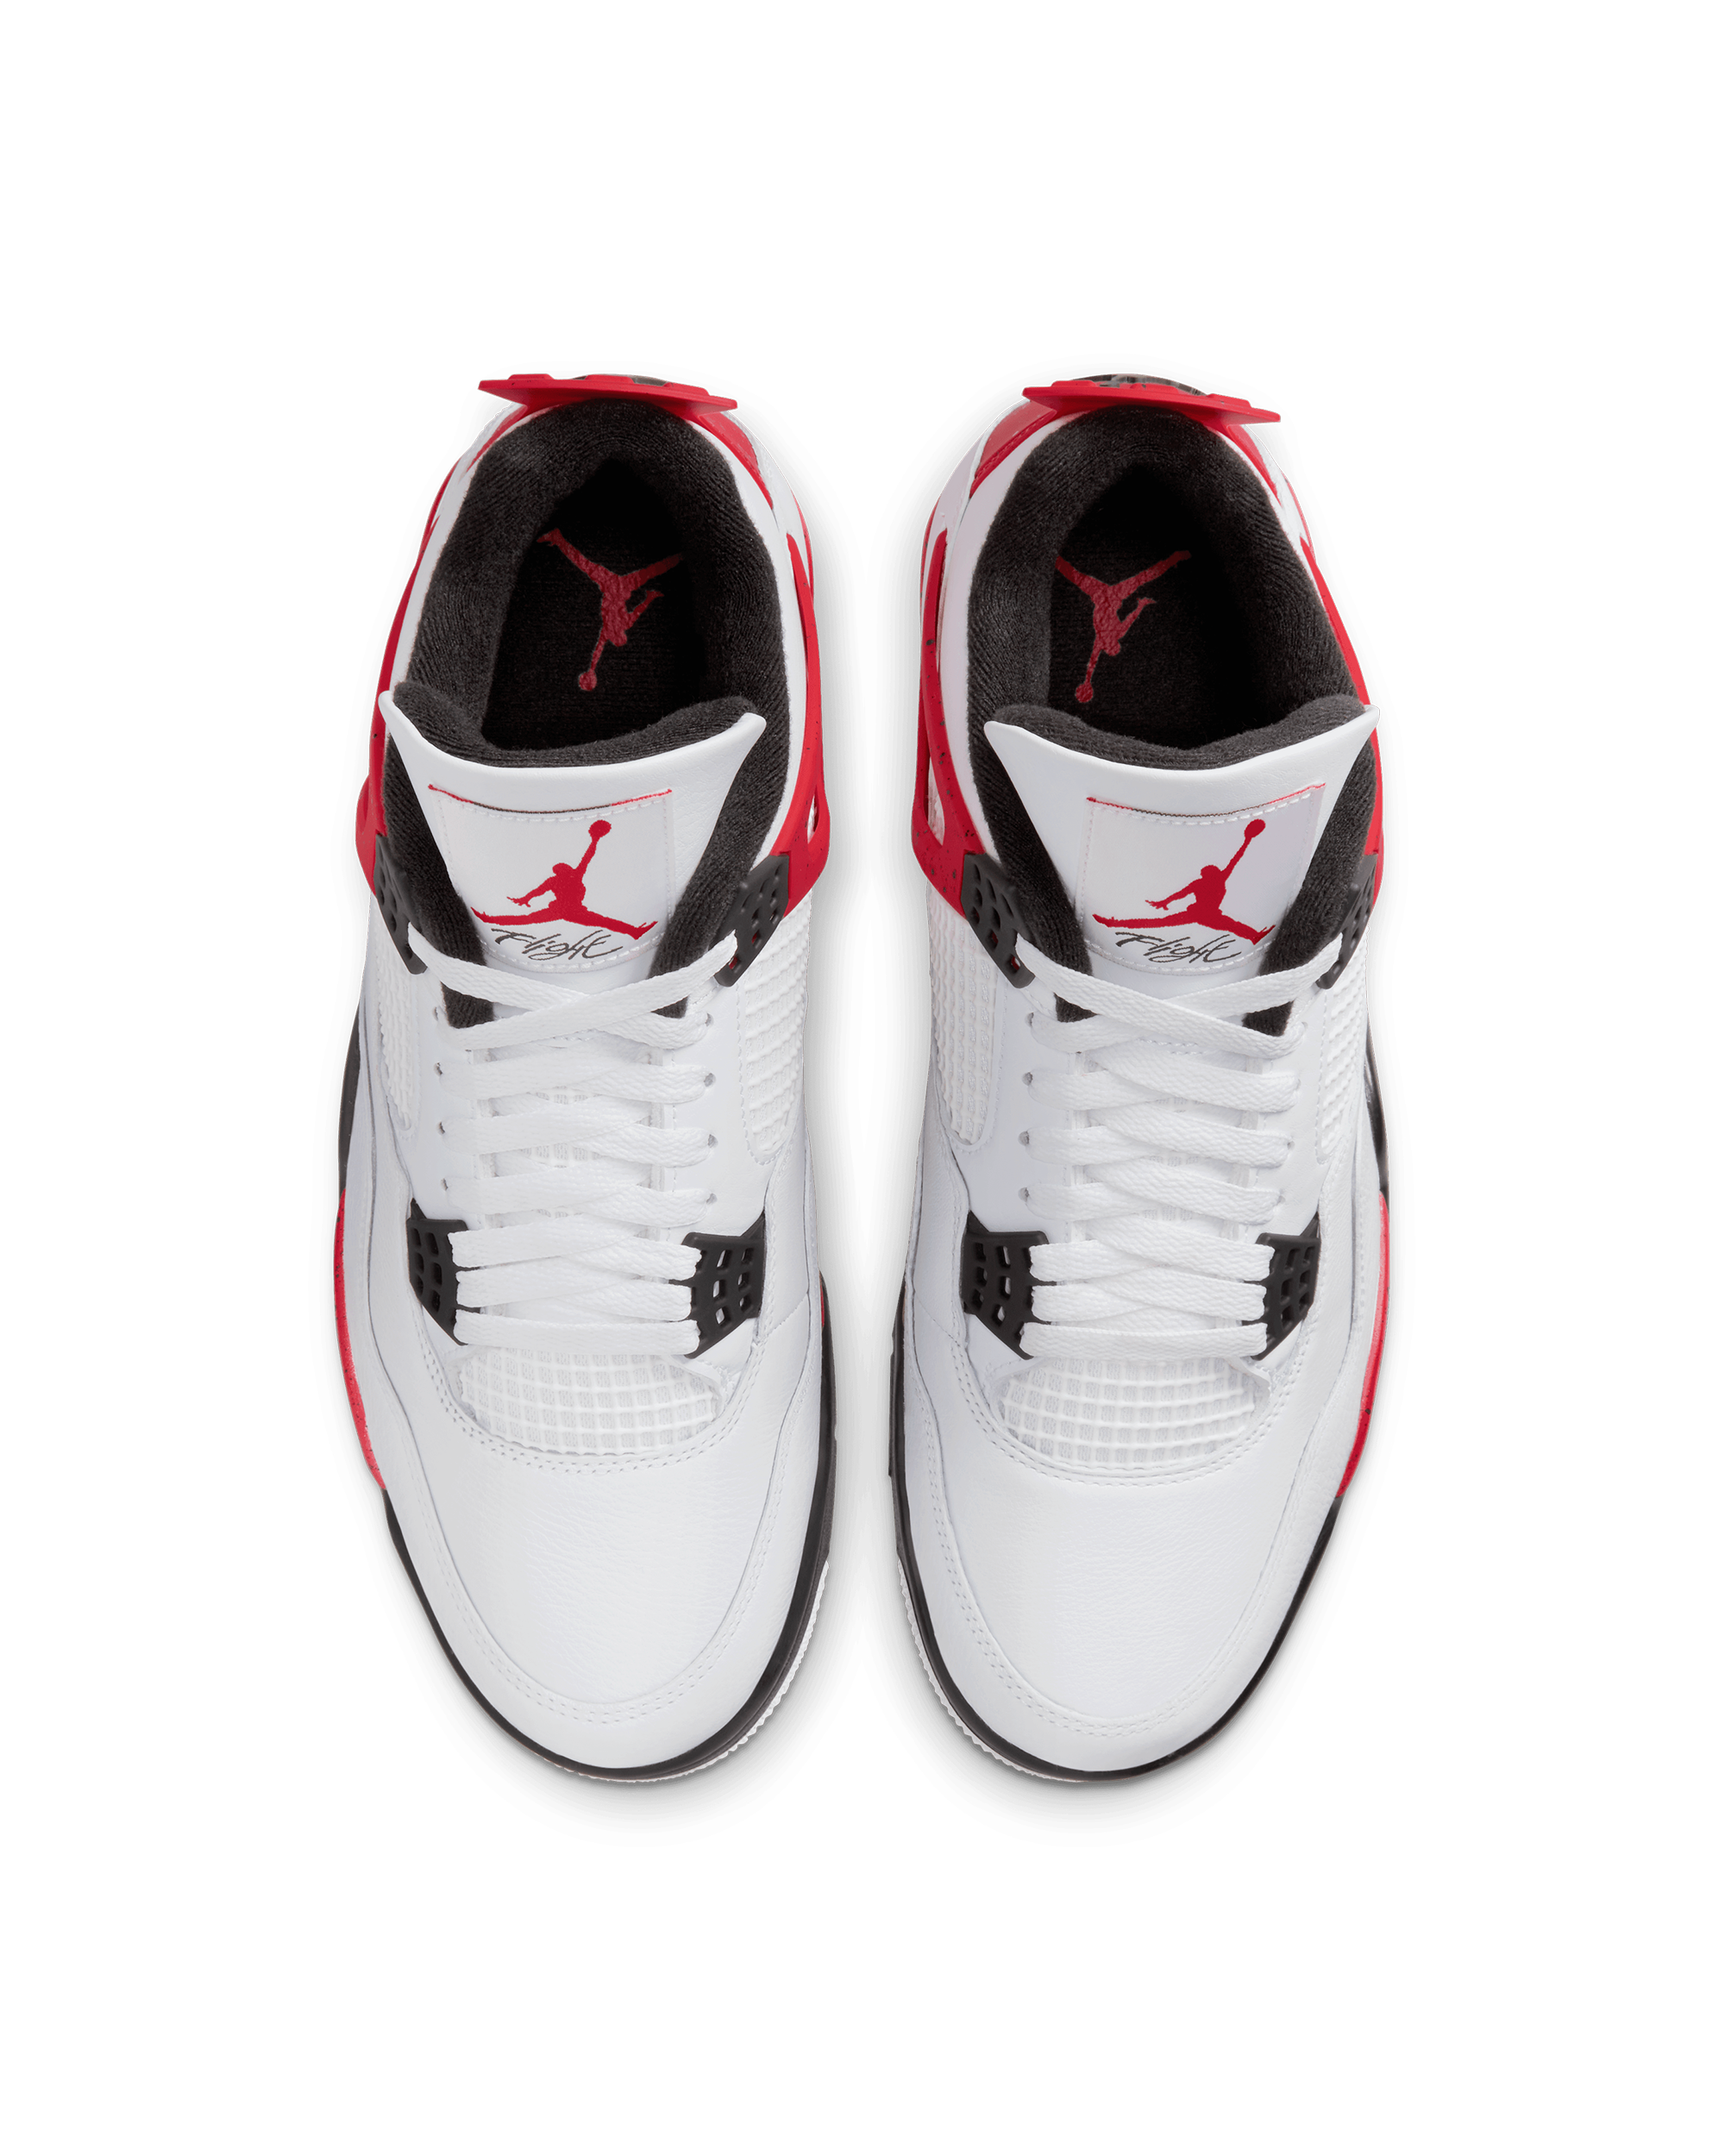 Air Jordan 4 Retro "Red Cement" - White / Fire Red / Black